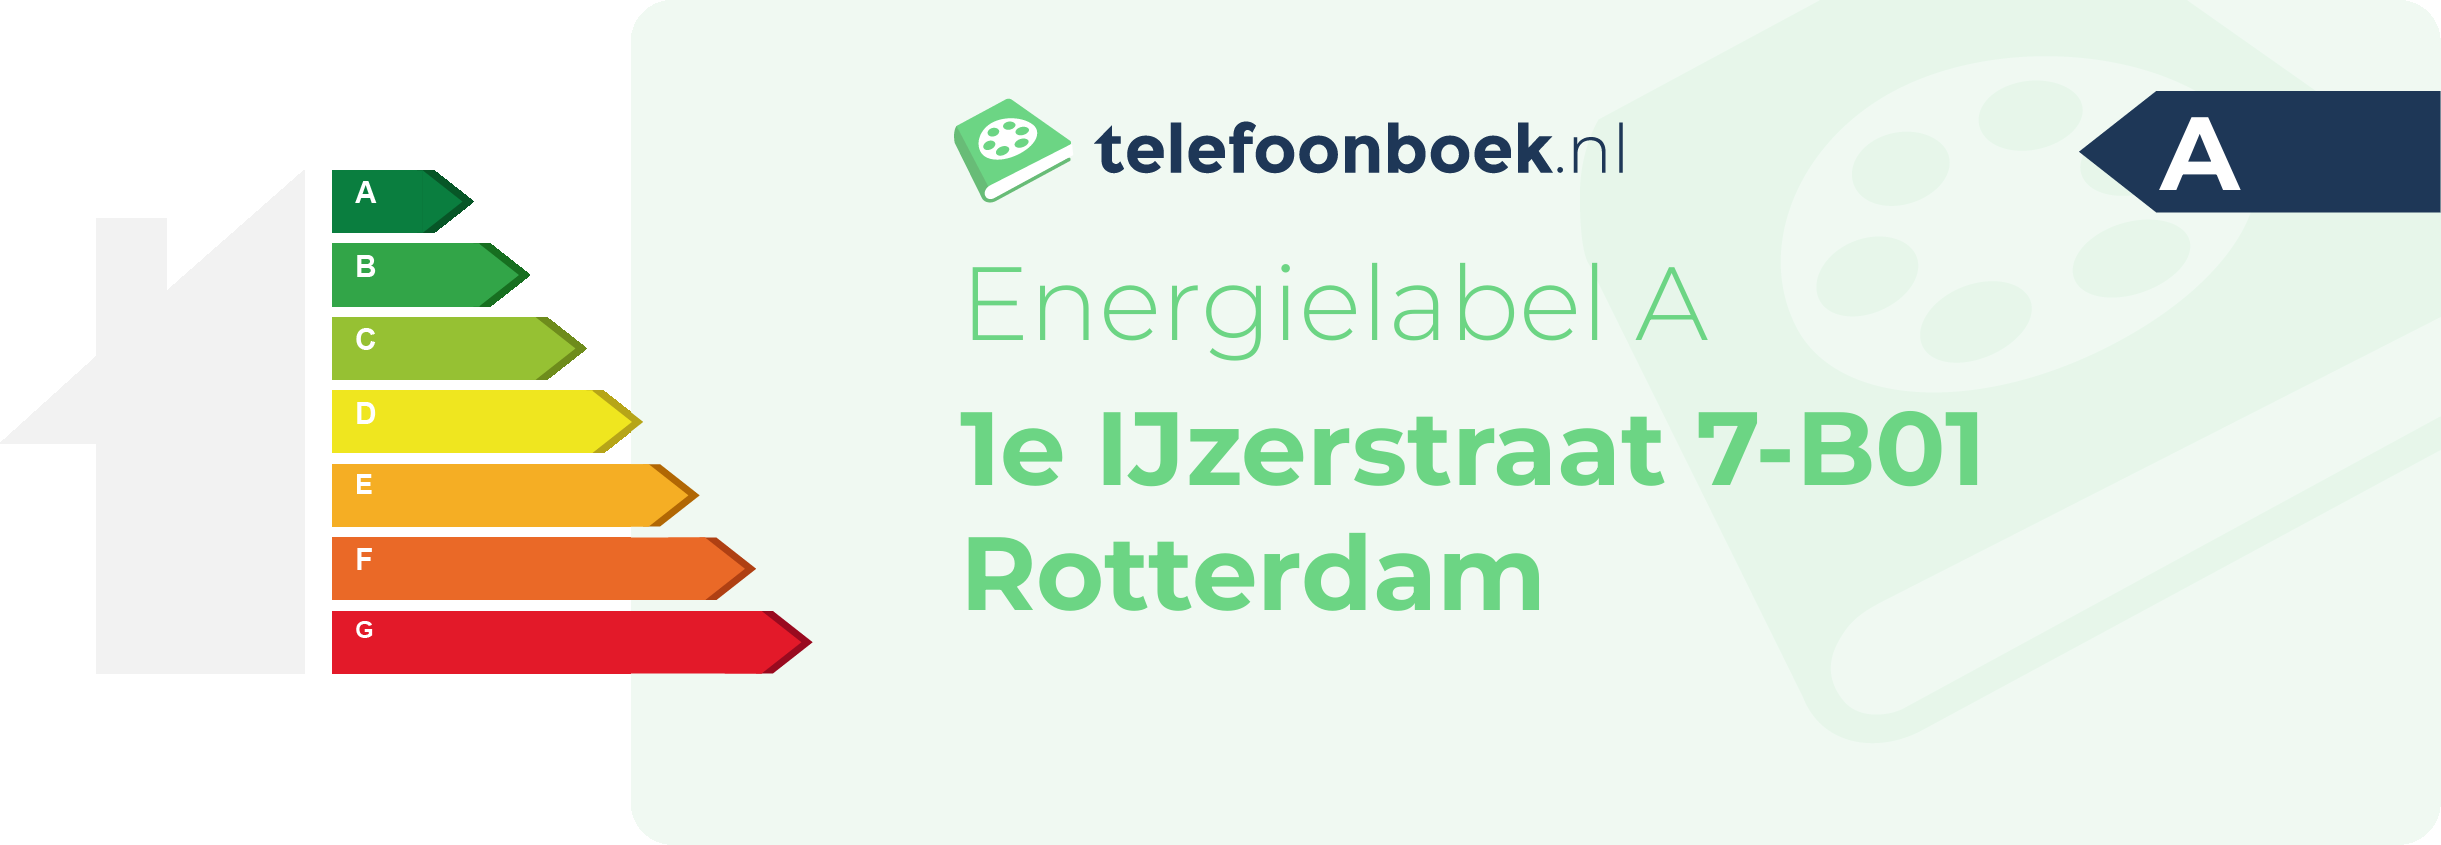 Energielabel 1e IJzerstraat 7-B01 Rotterdam